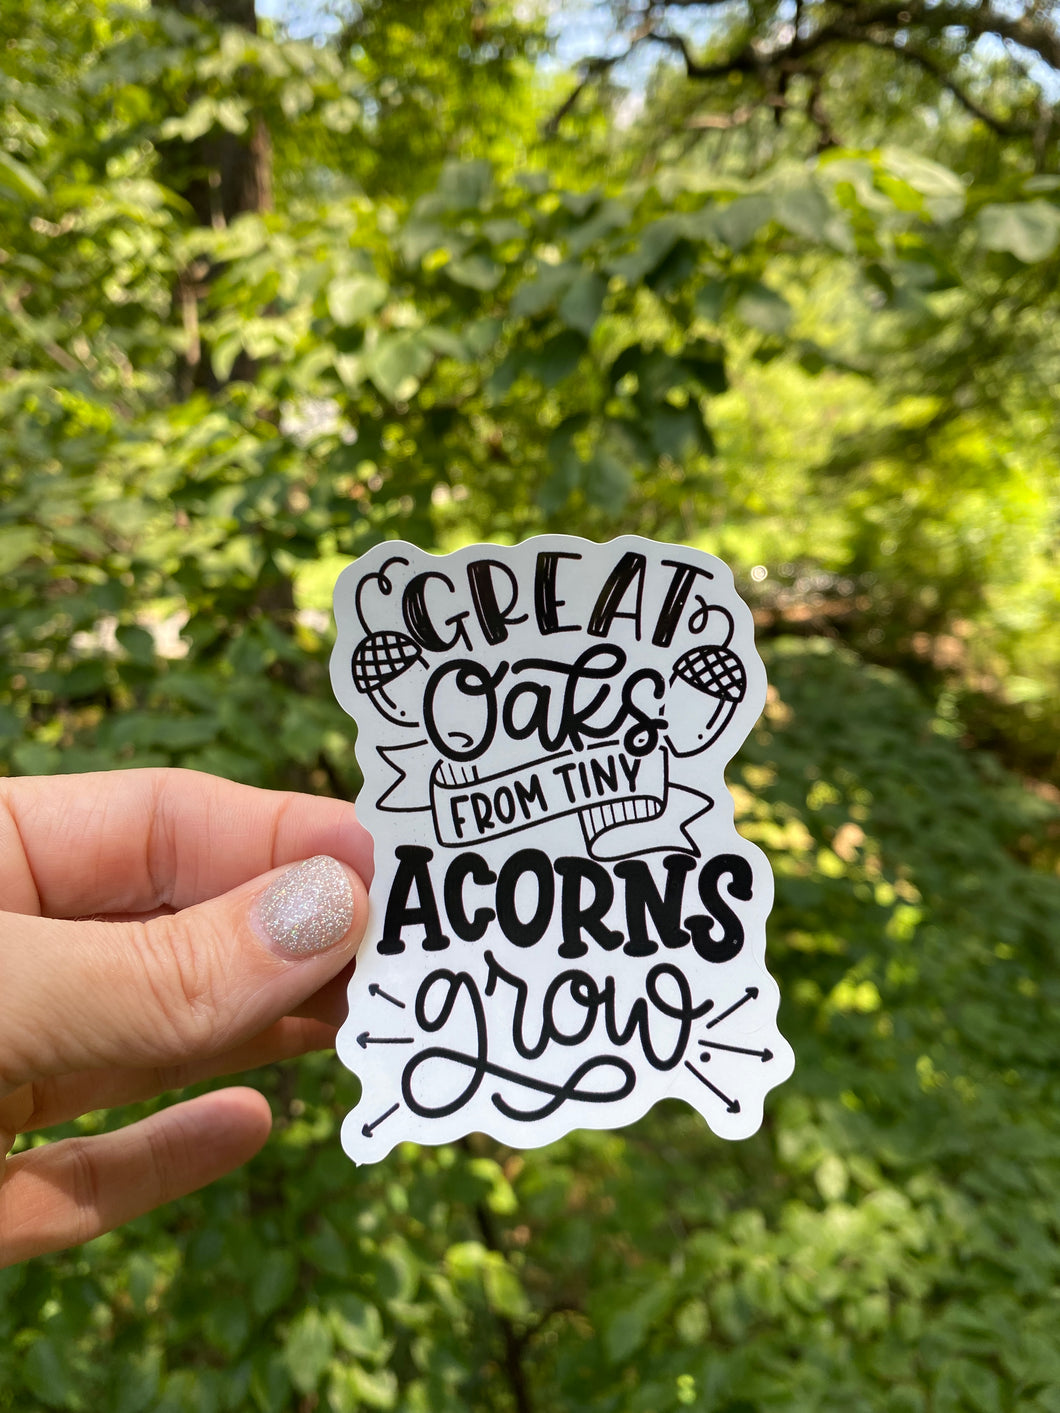 Sticker 1G Great Oaks from Tiny Acorns Grow